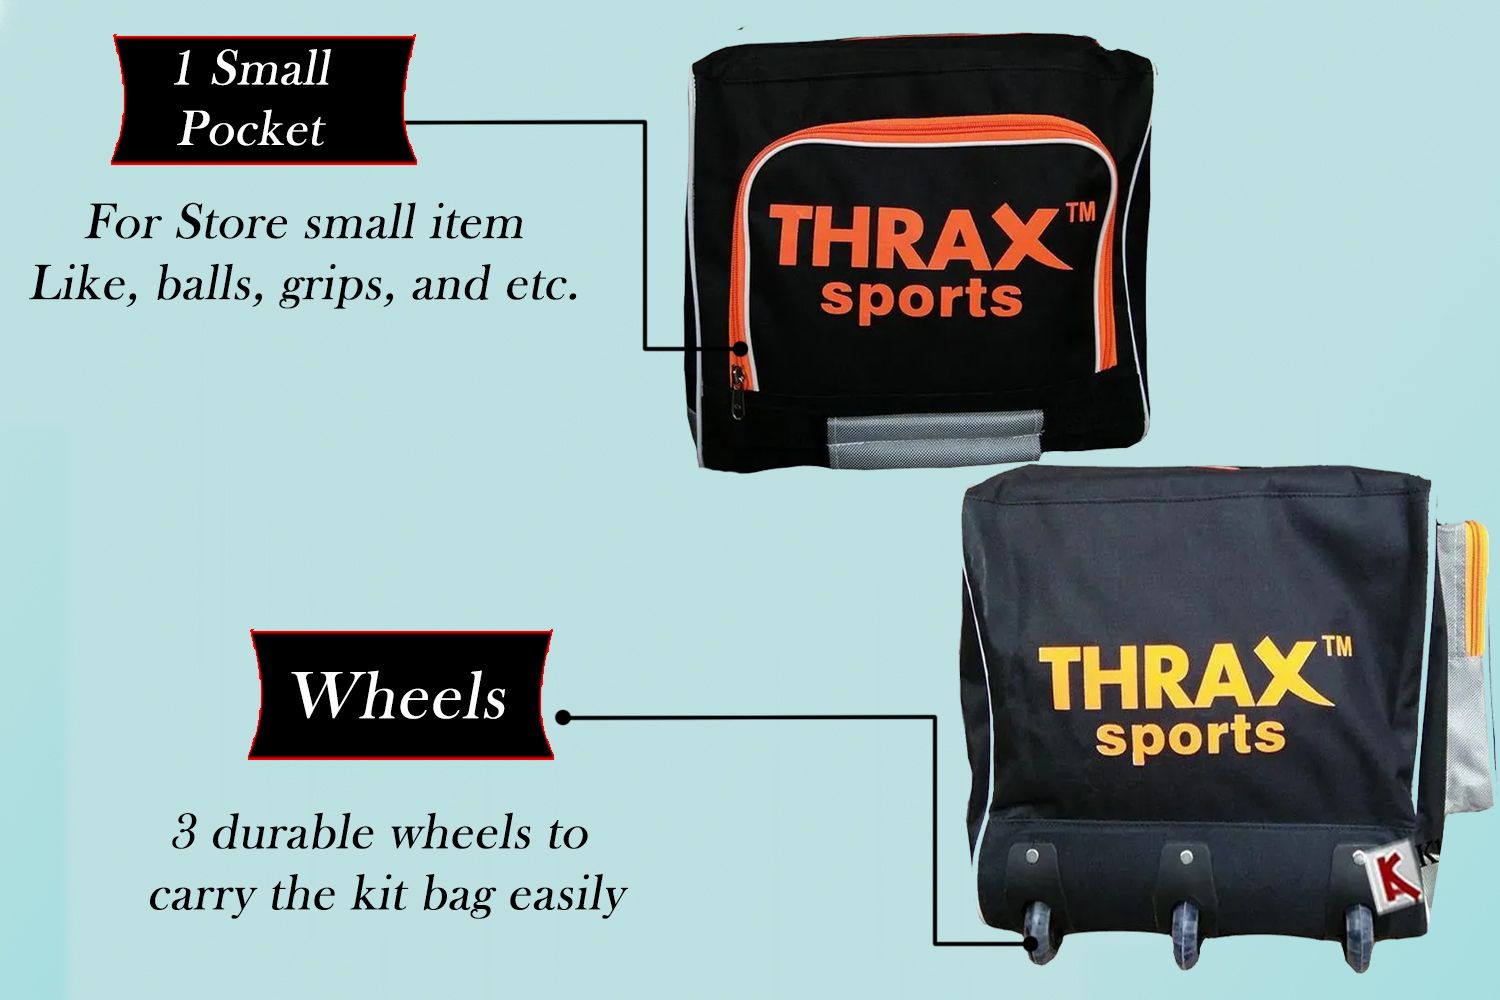 Thrax Proto 11 Wheel Cricket Kit Bag Black And Orange